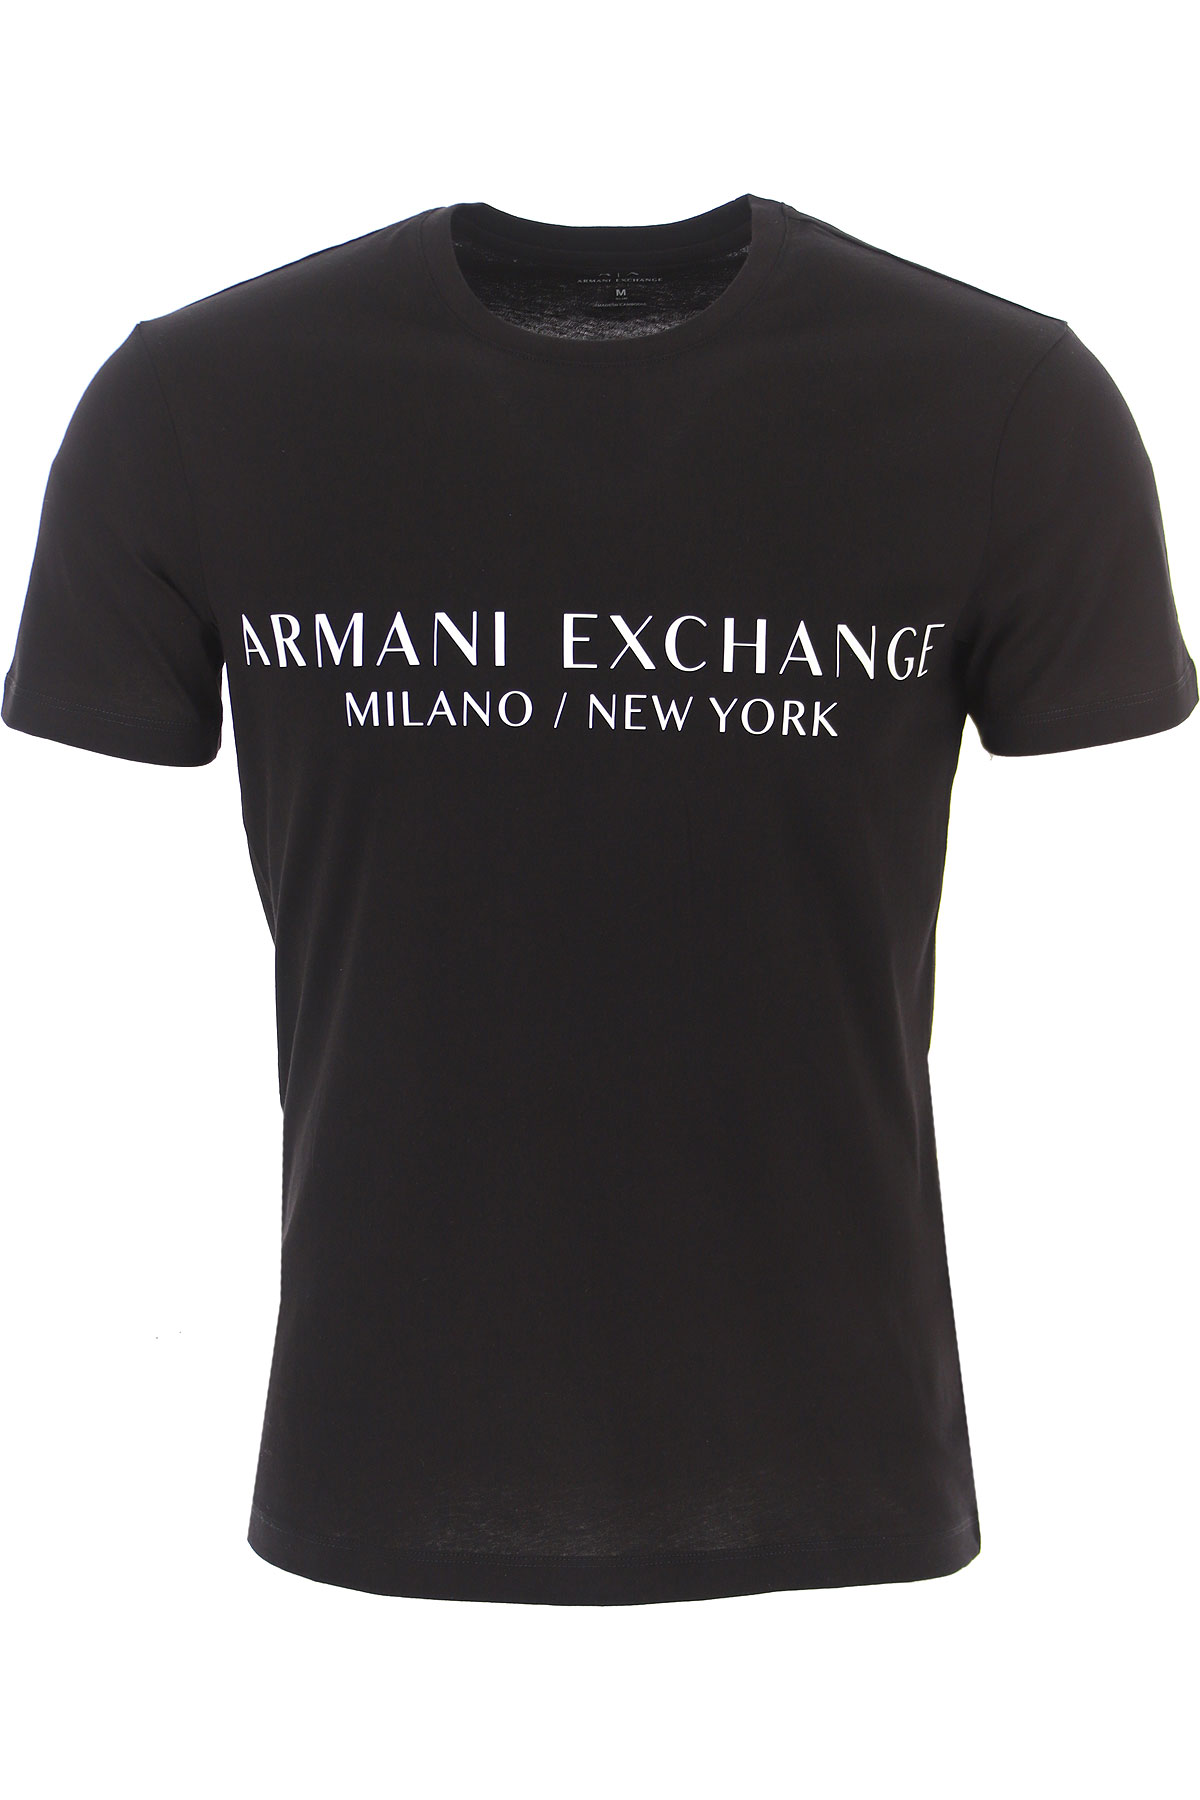 Mens Clothing Armani Exchange, Style code: 8nzt72-z8h4z-1200